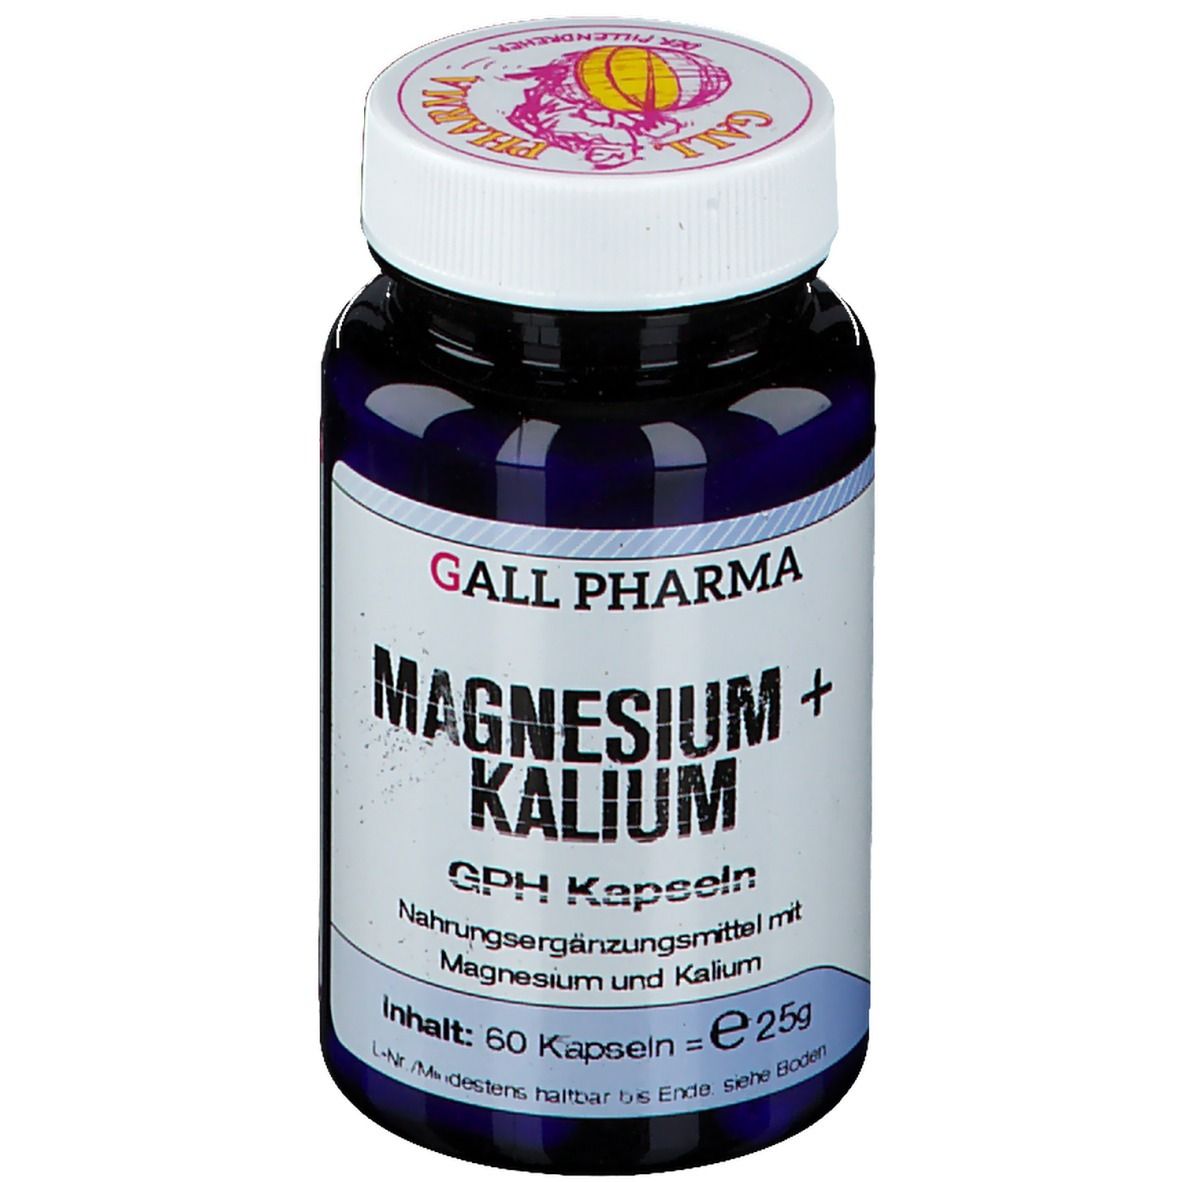 Gall Pharma Magnesium + Kalium